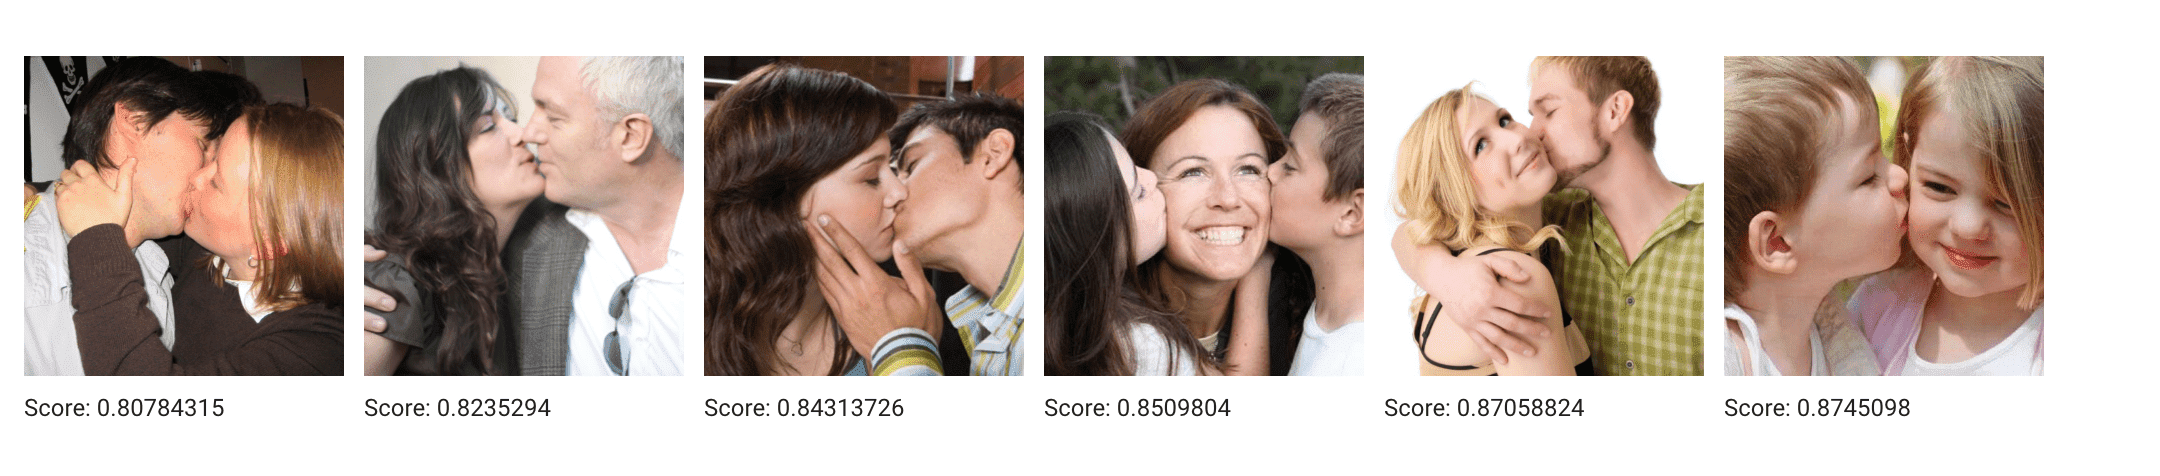 People Kissing Image